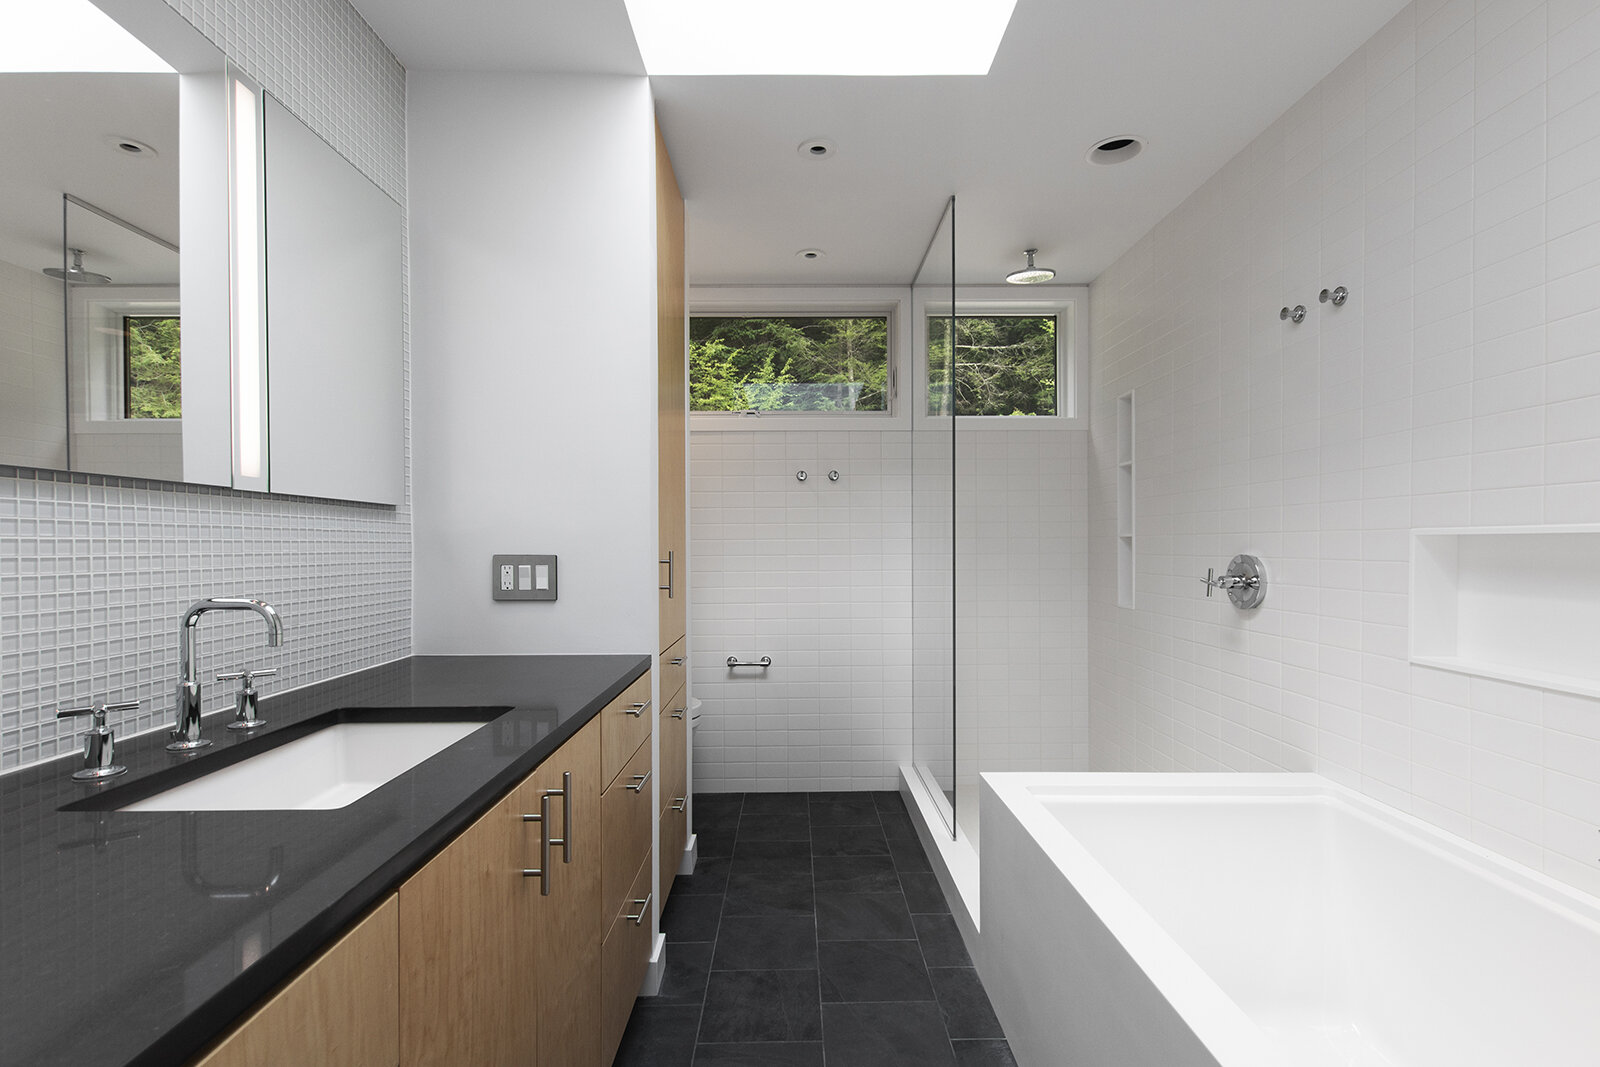 16-res4-re4a-resolution-4-architecture-modern-modular-prefab-sharon residence-interior-master-bathroom.jpg